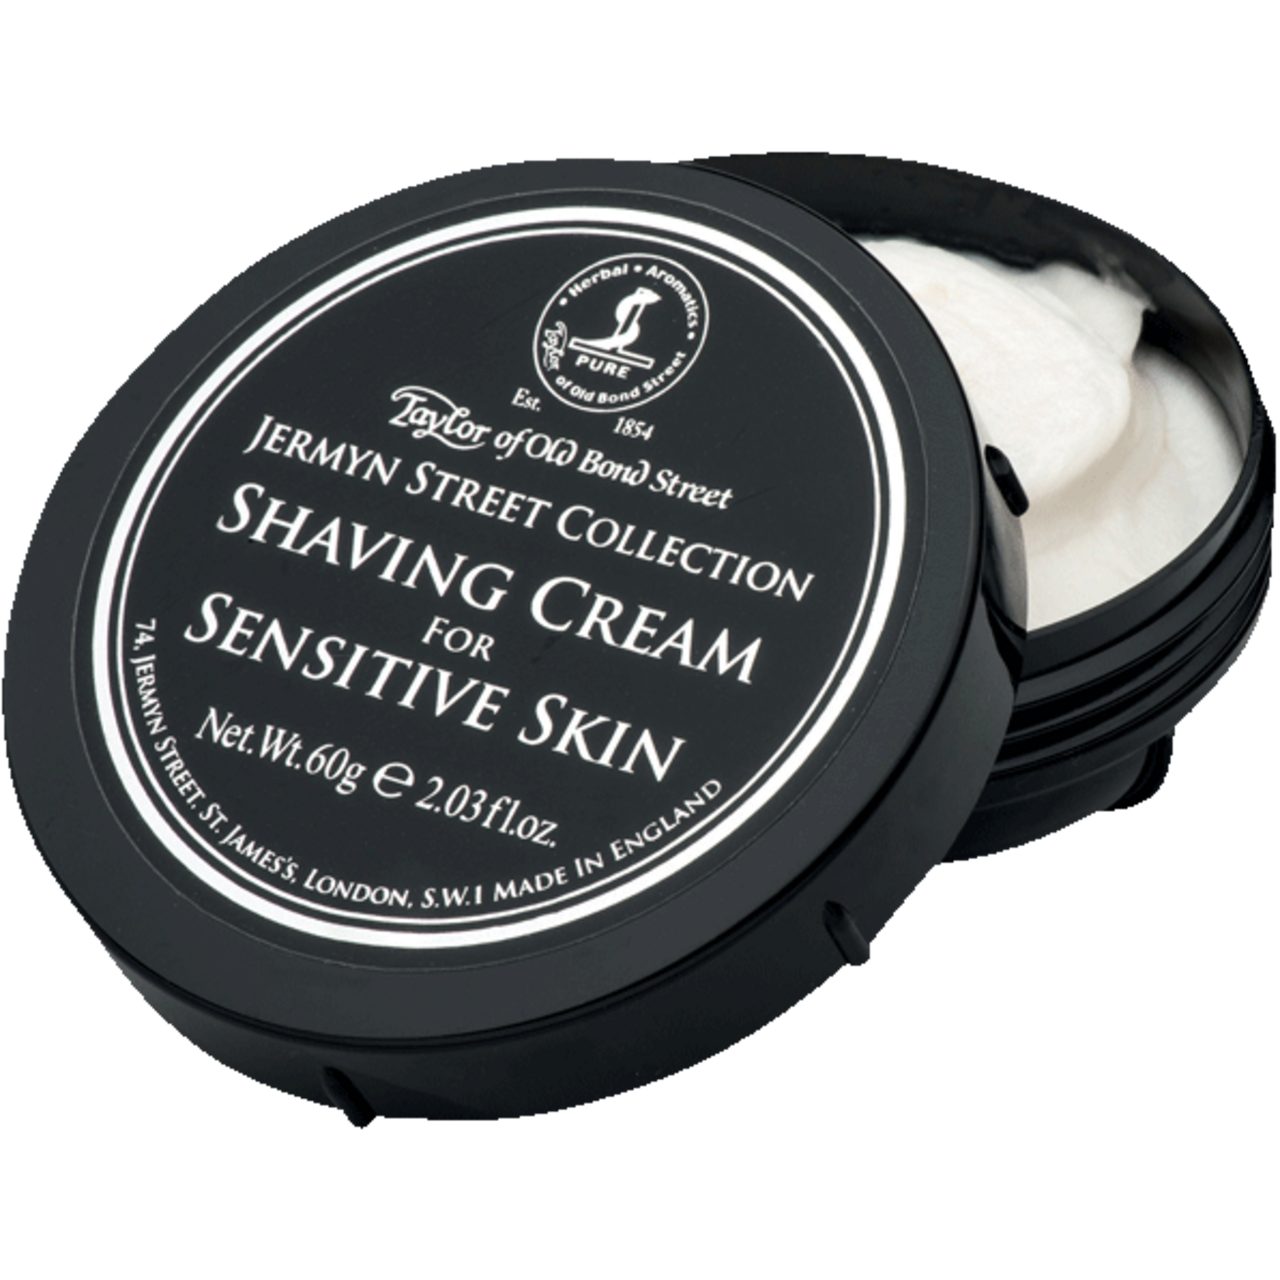 Cream Shaving Jermyn Taylor Street of Skin for Bond Old Collection sensitive Rasiercreme Street